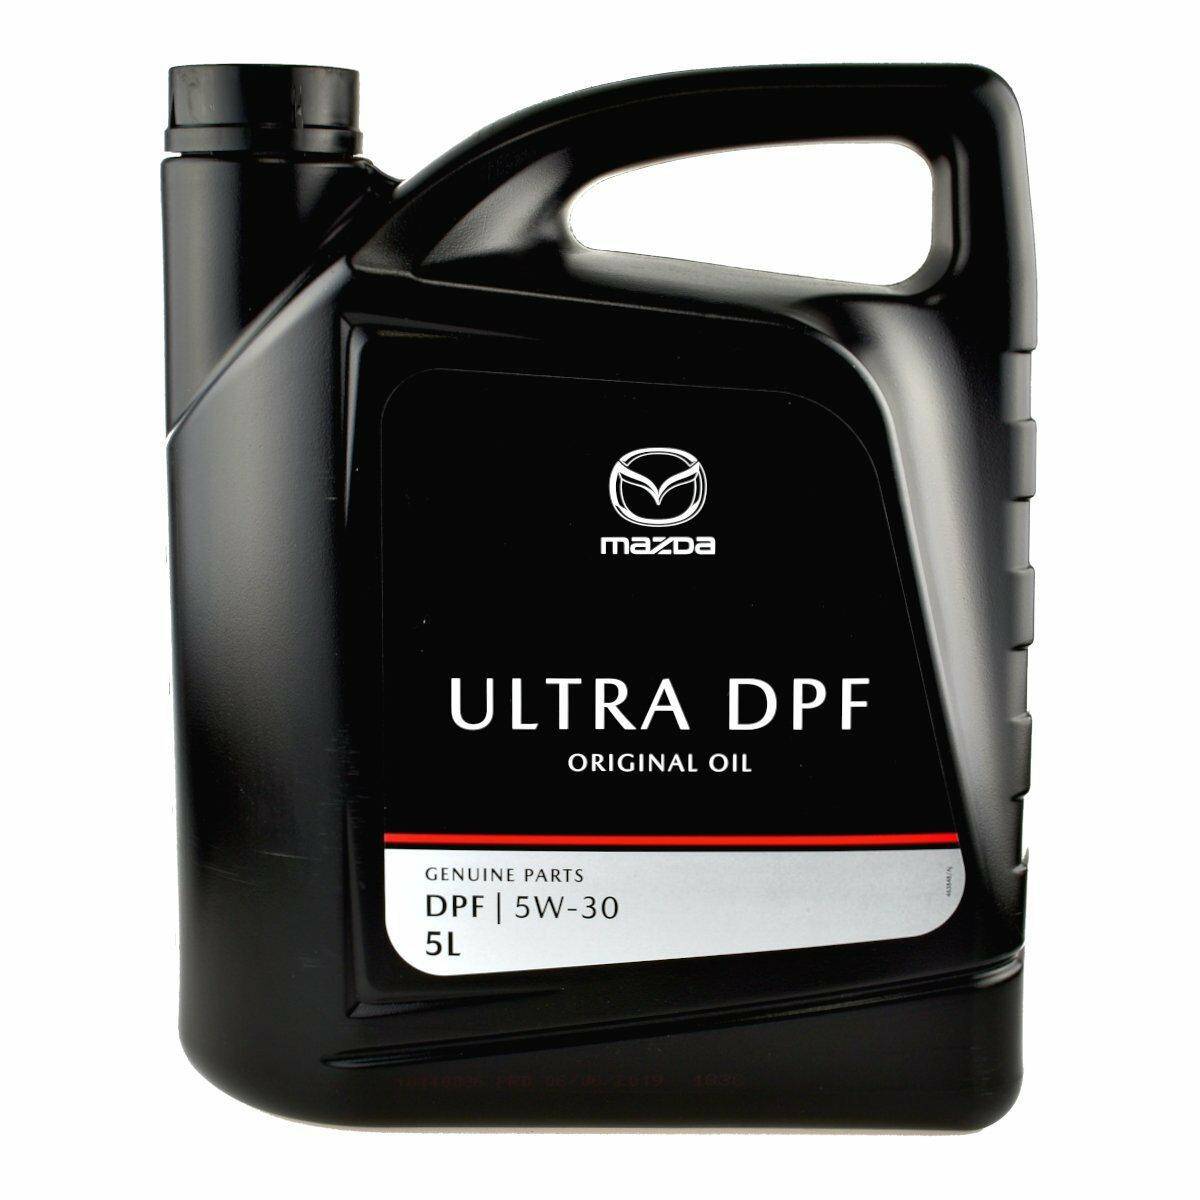 Mazda Original Oil Ultra DPF 5W30 5L